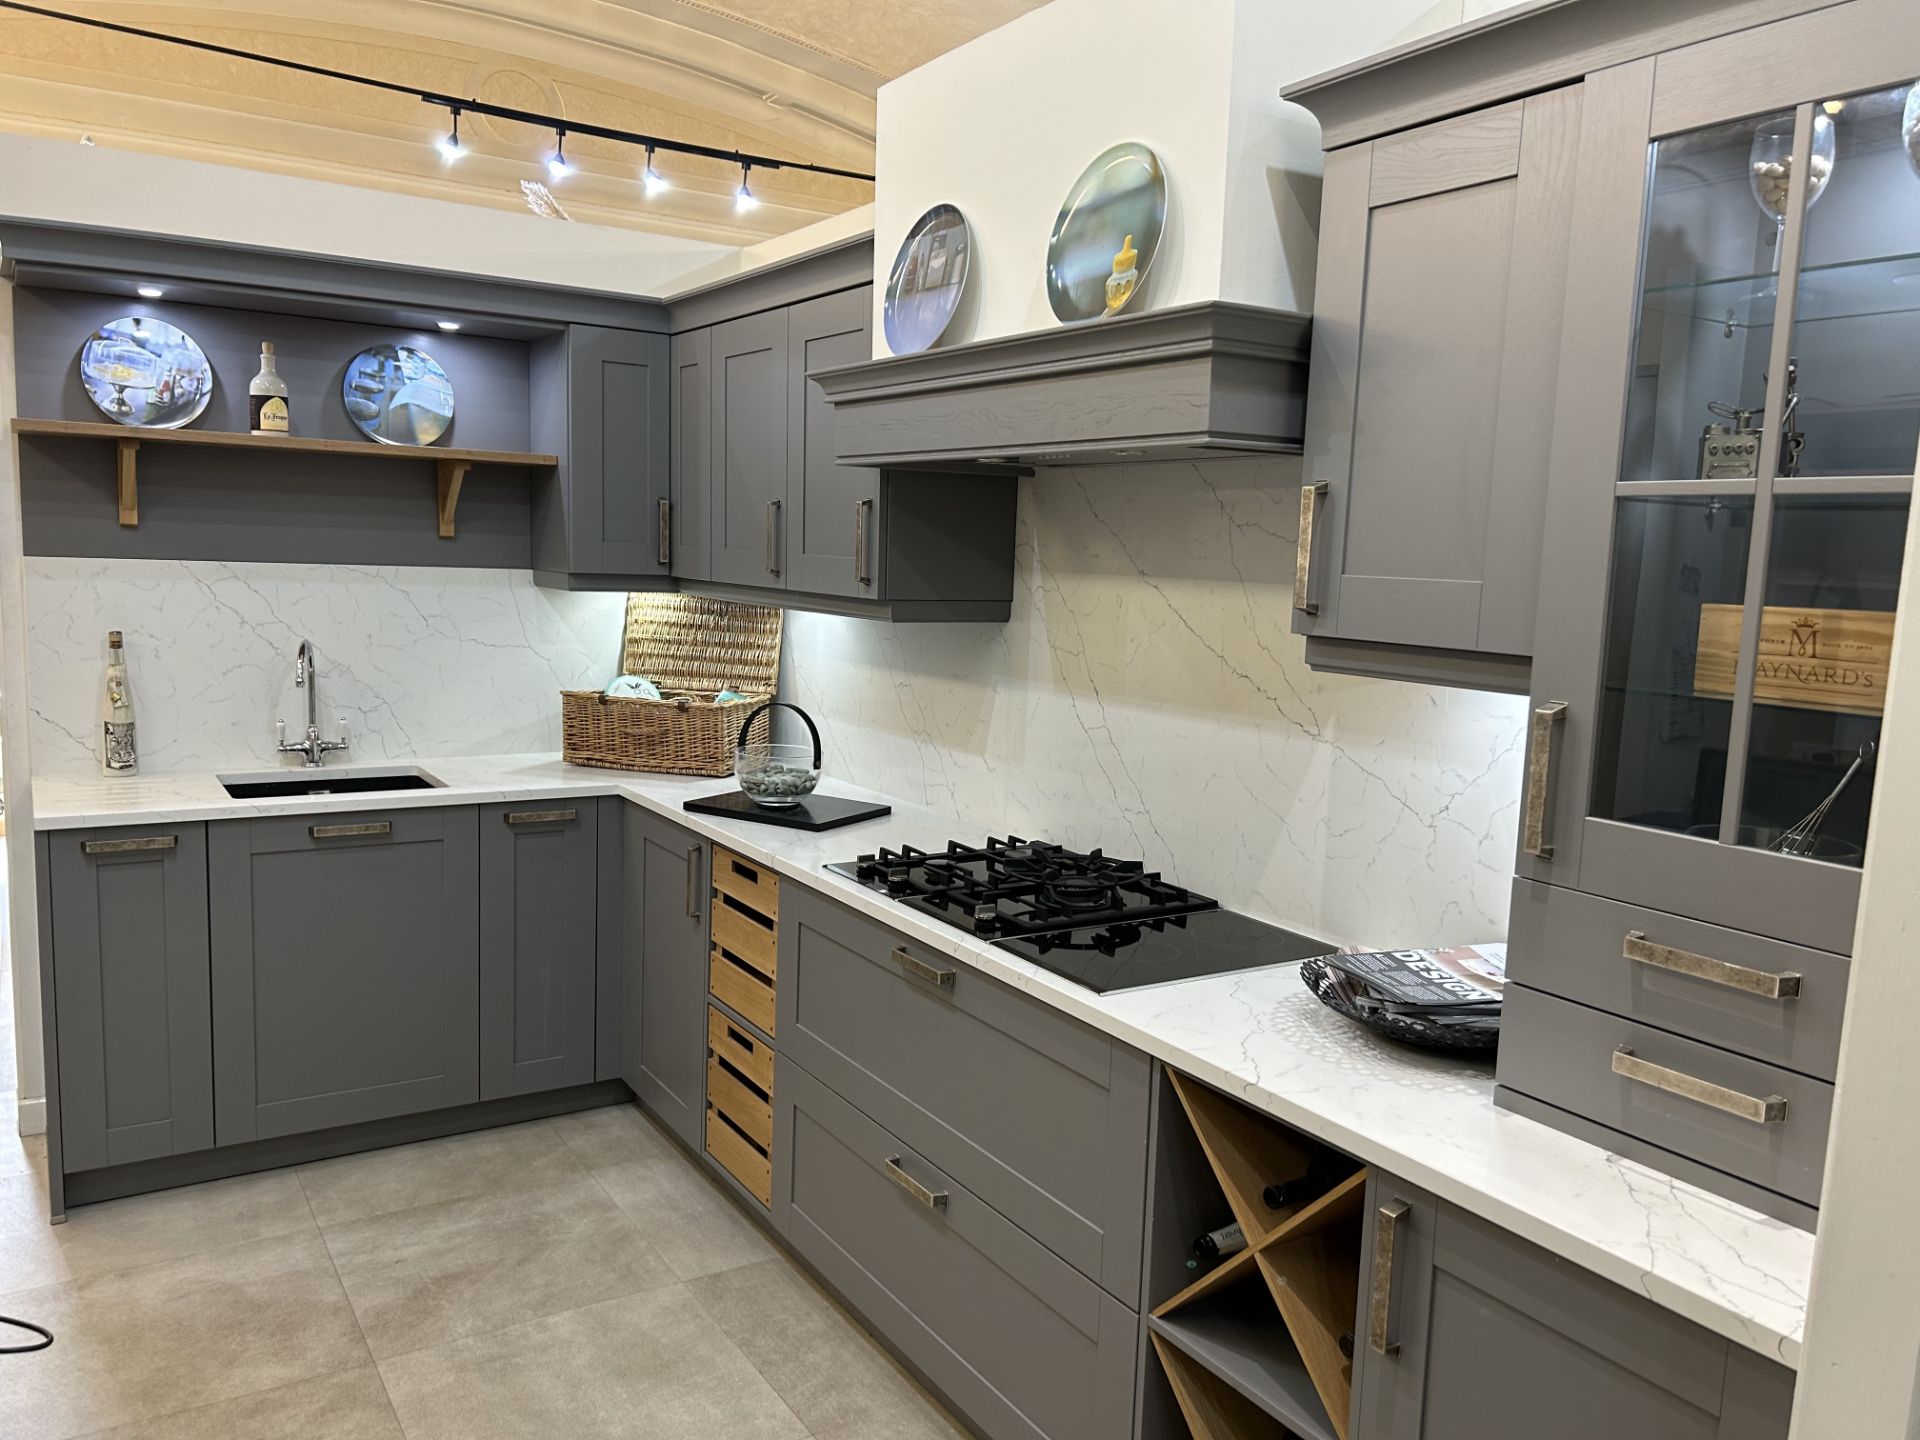 Display kitchen comprising grey laminated wood effect doors with metal handles